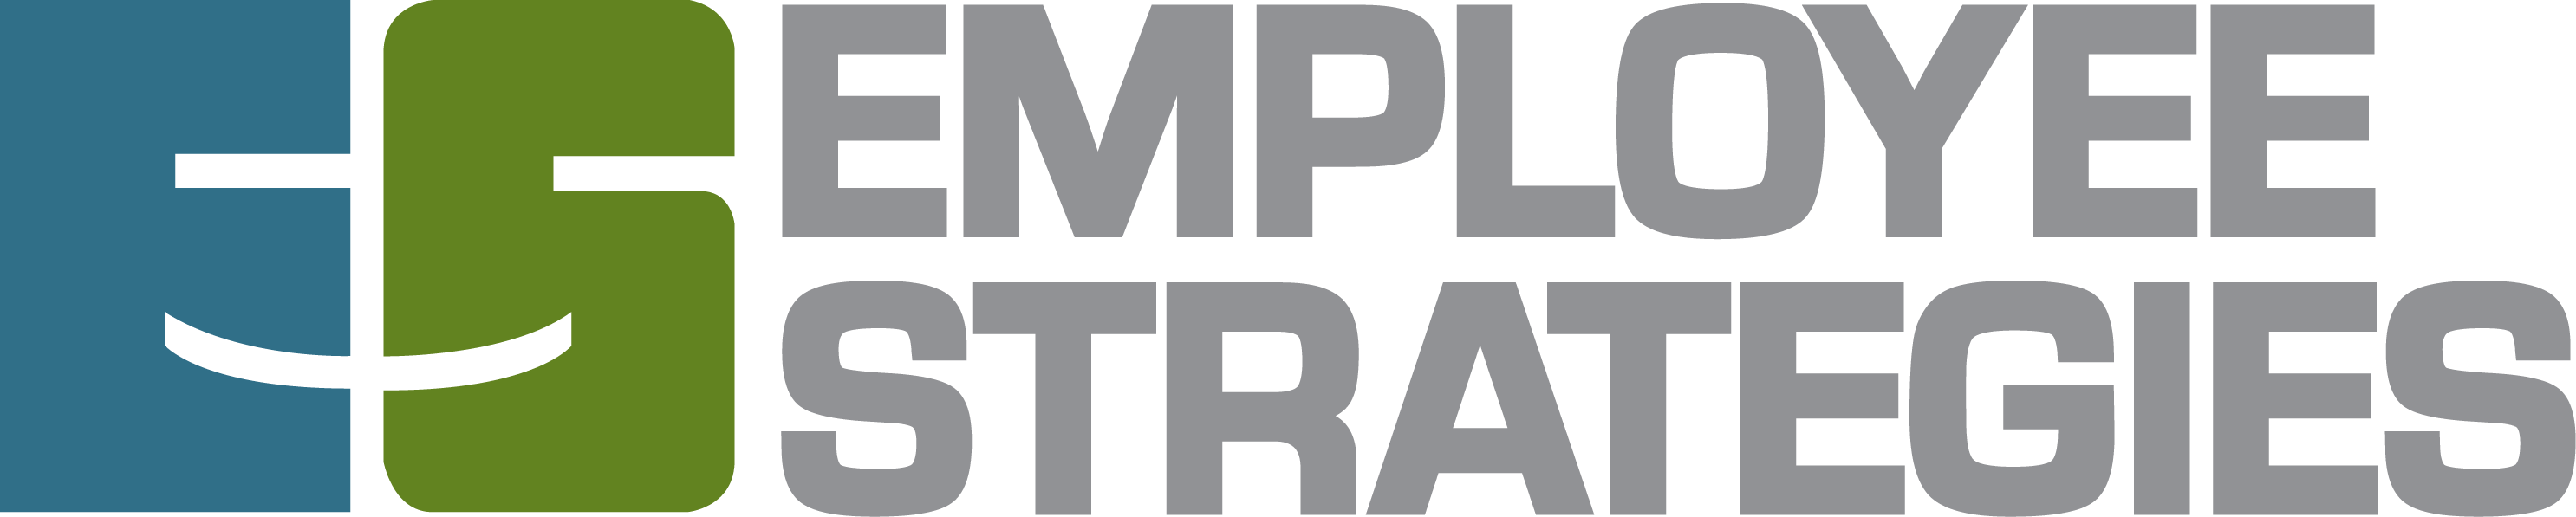 Employee Strategies logo